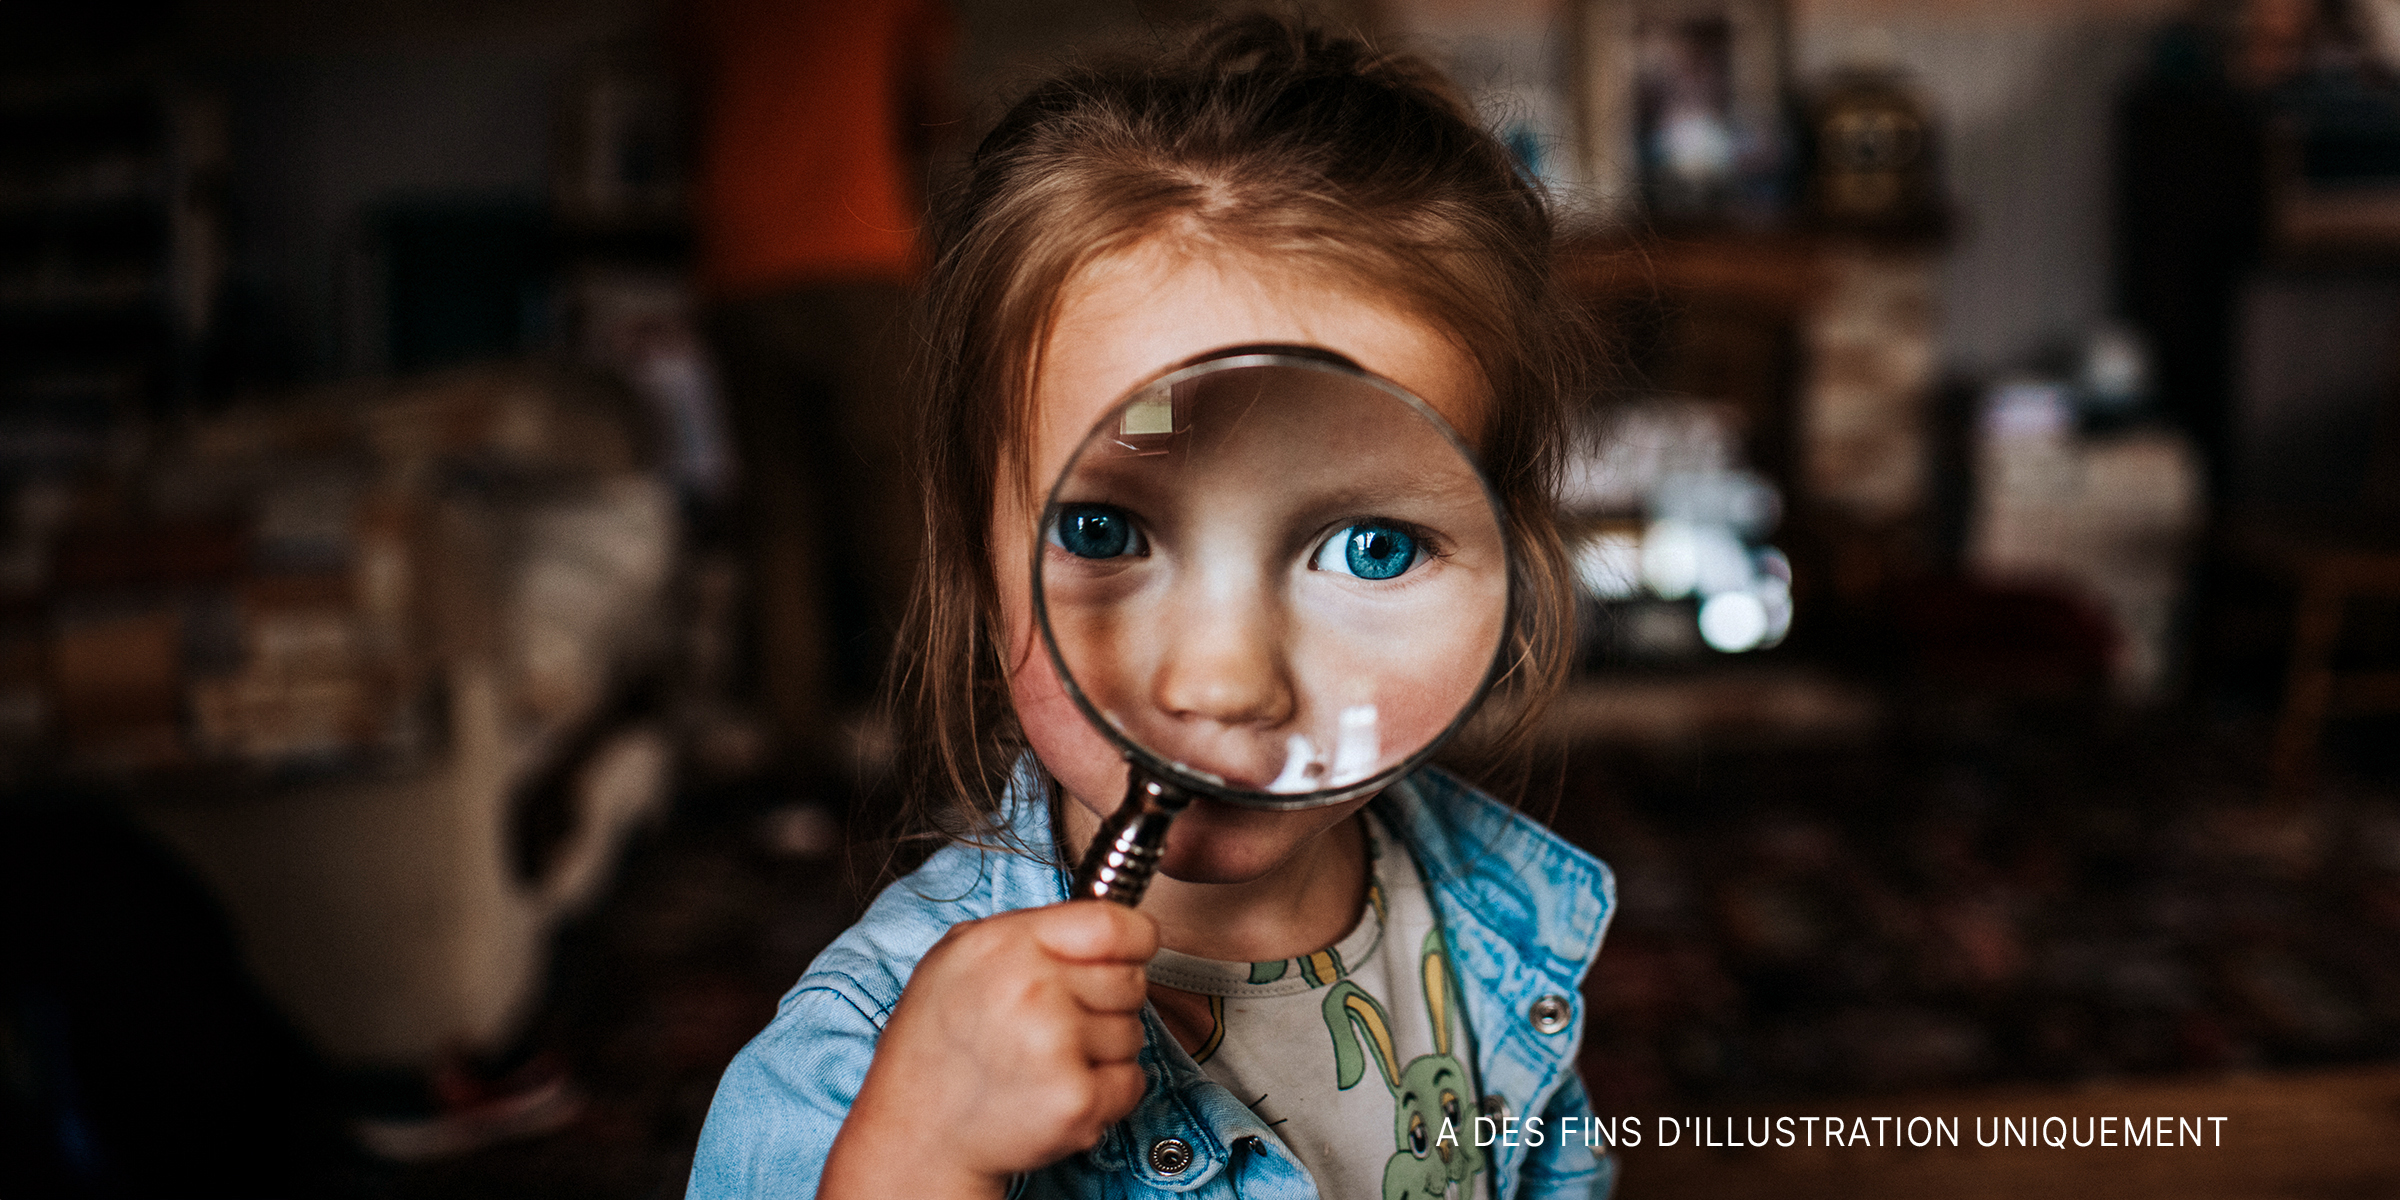 Une petite fille tenant une loupe | Source : Shutterstock